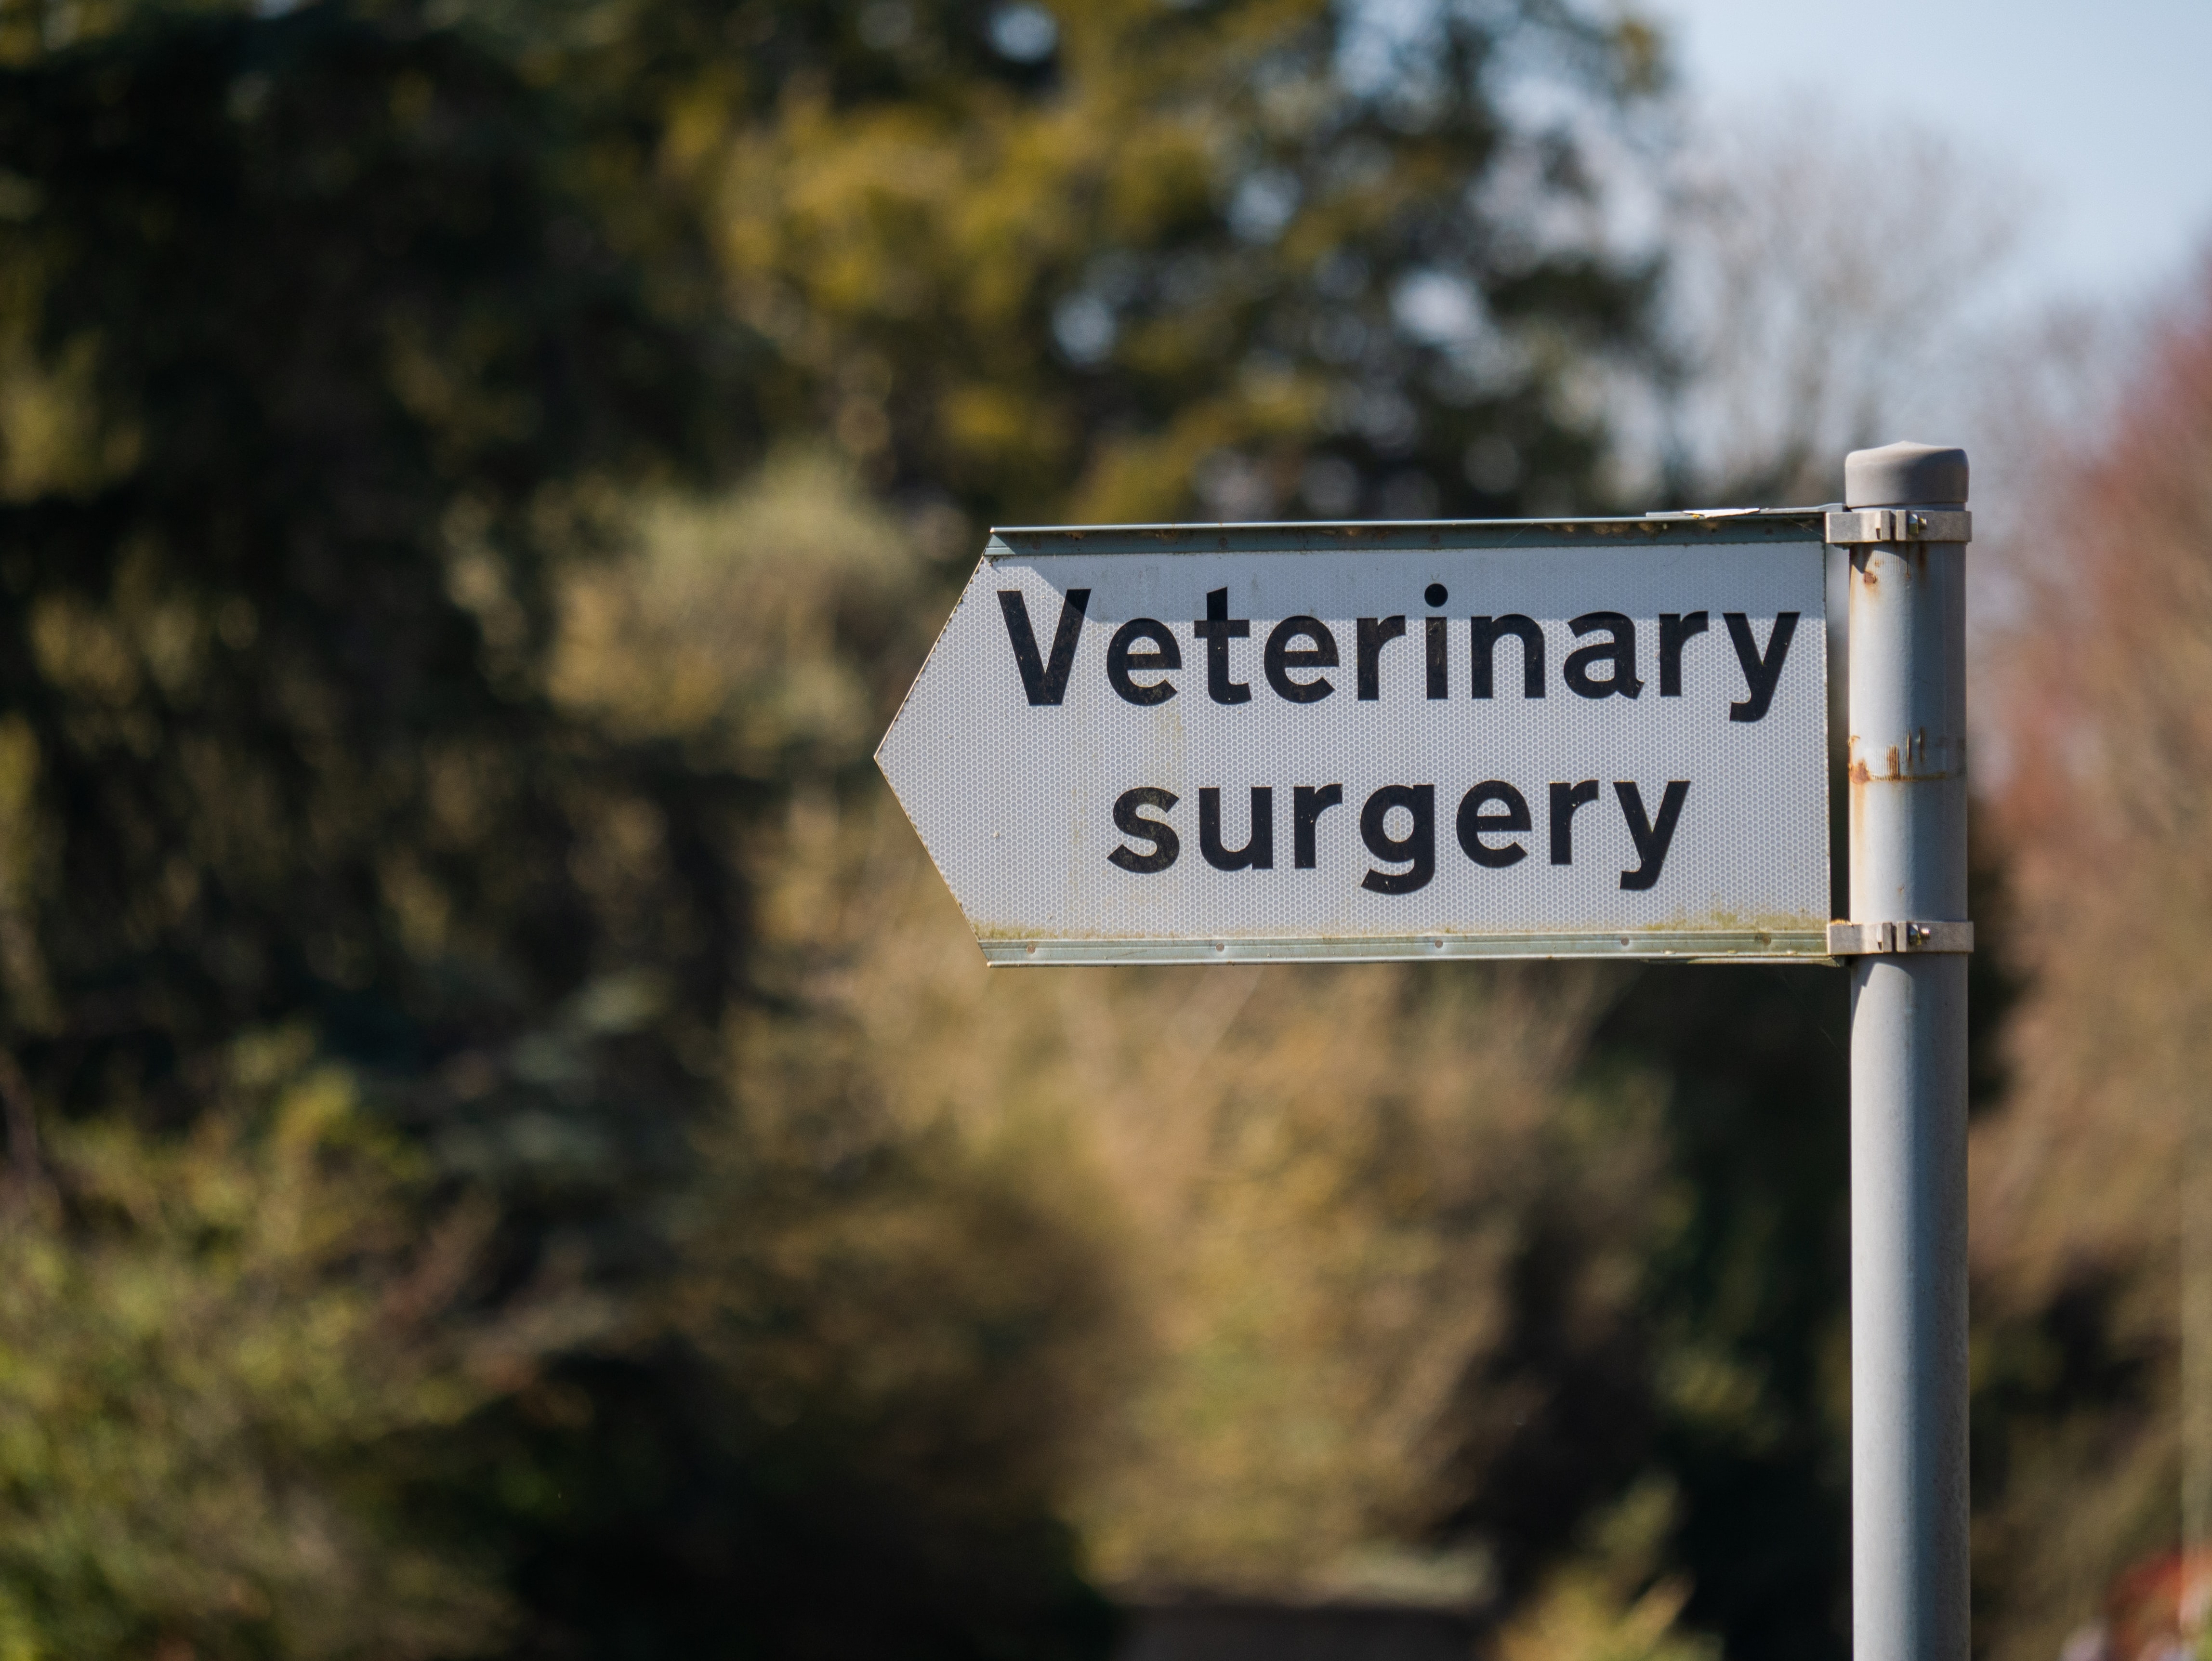 Veterinary surgery sign by Matt Seymour